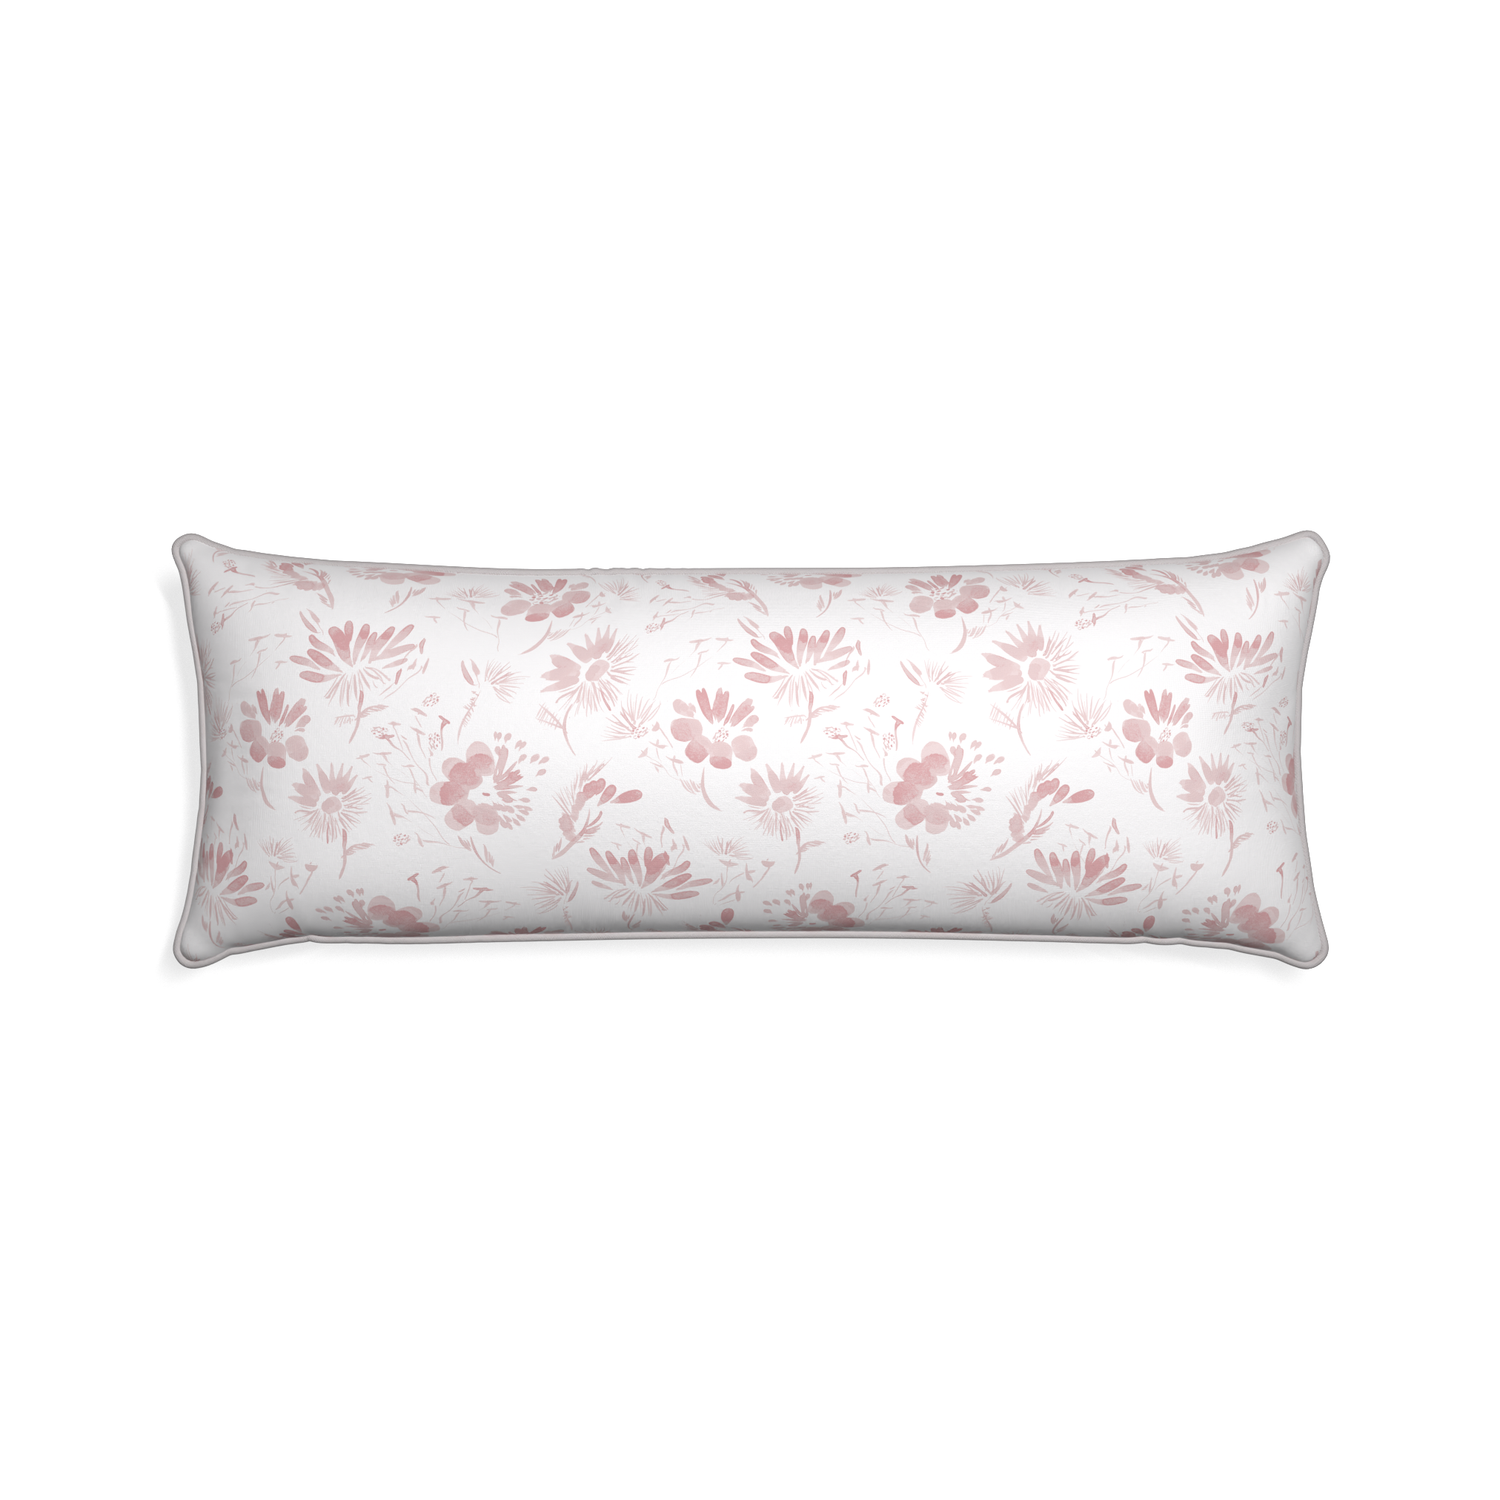 Xl-lumbar blake custom pillow with pebble piping on white background